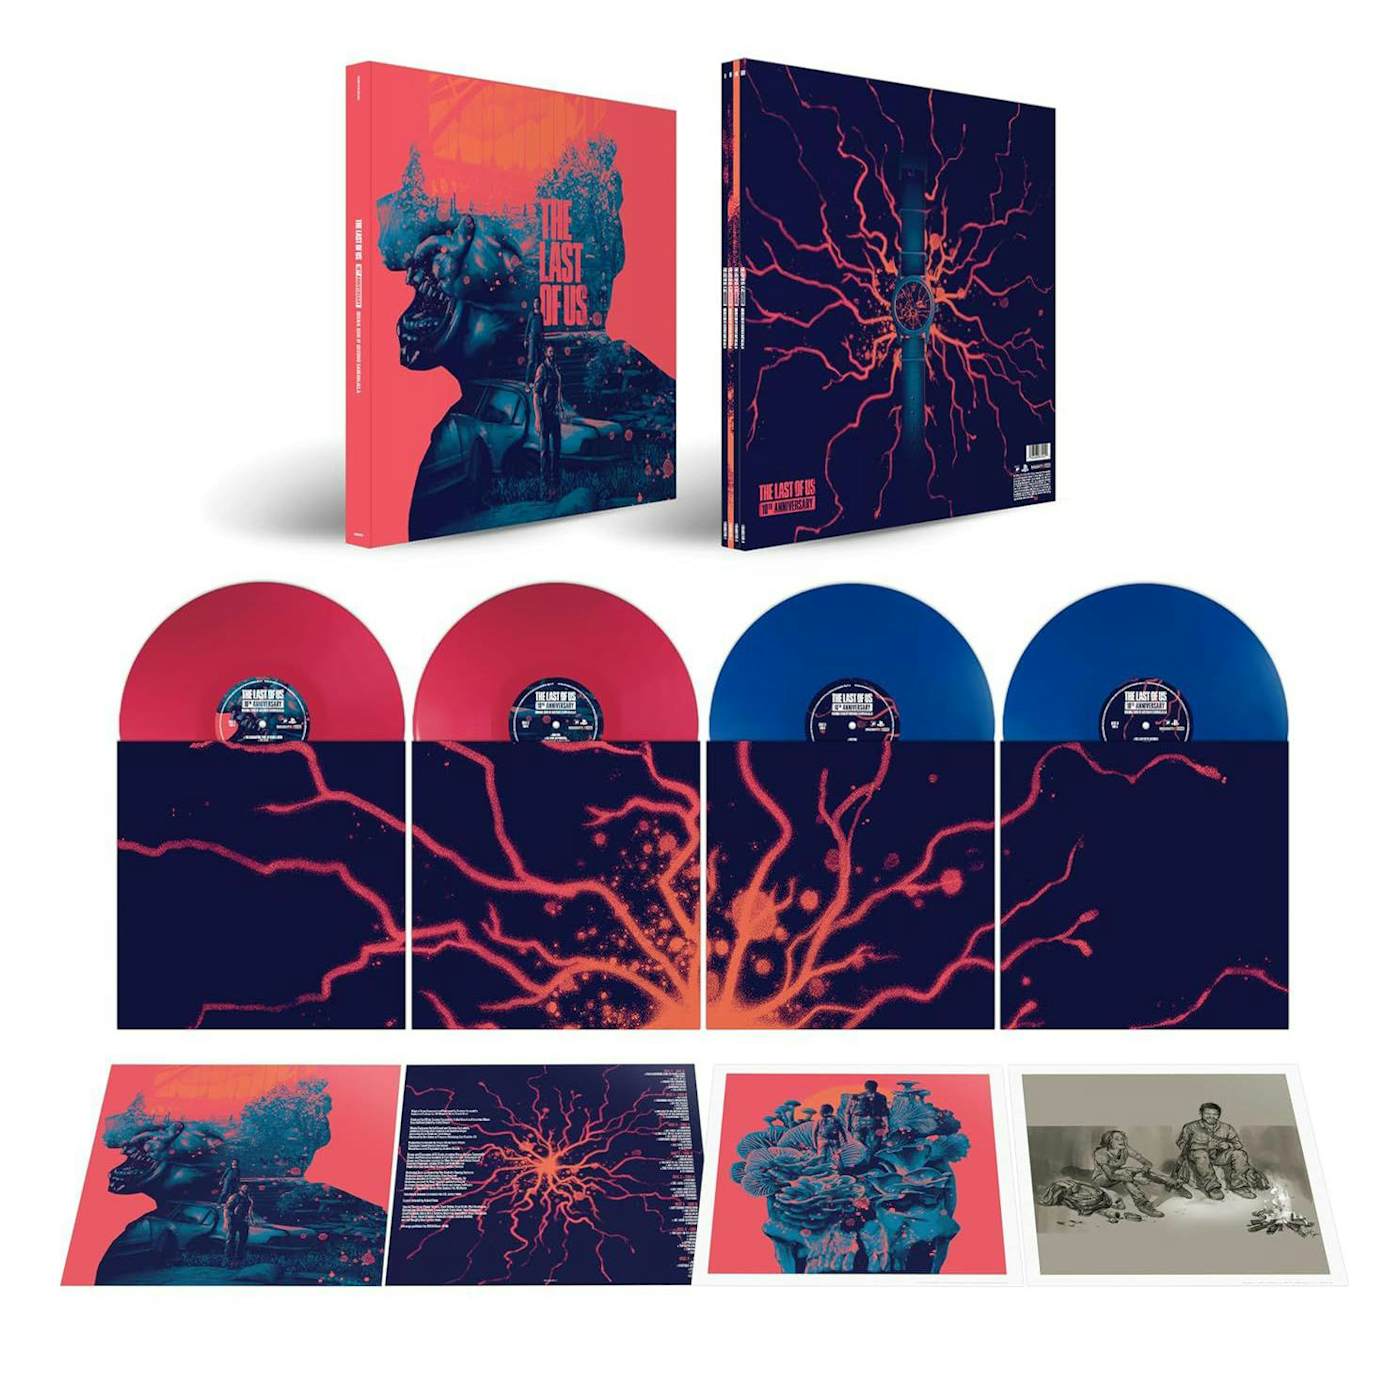 Gustavo Santaolalla The Last of Us 10th Anniversary Vinyl Box Set